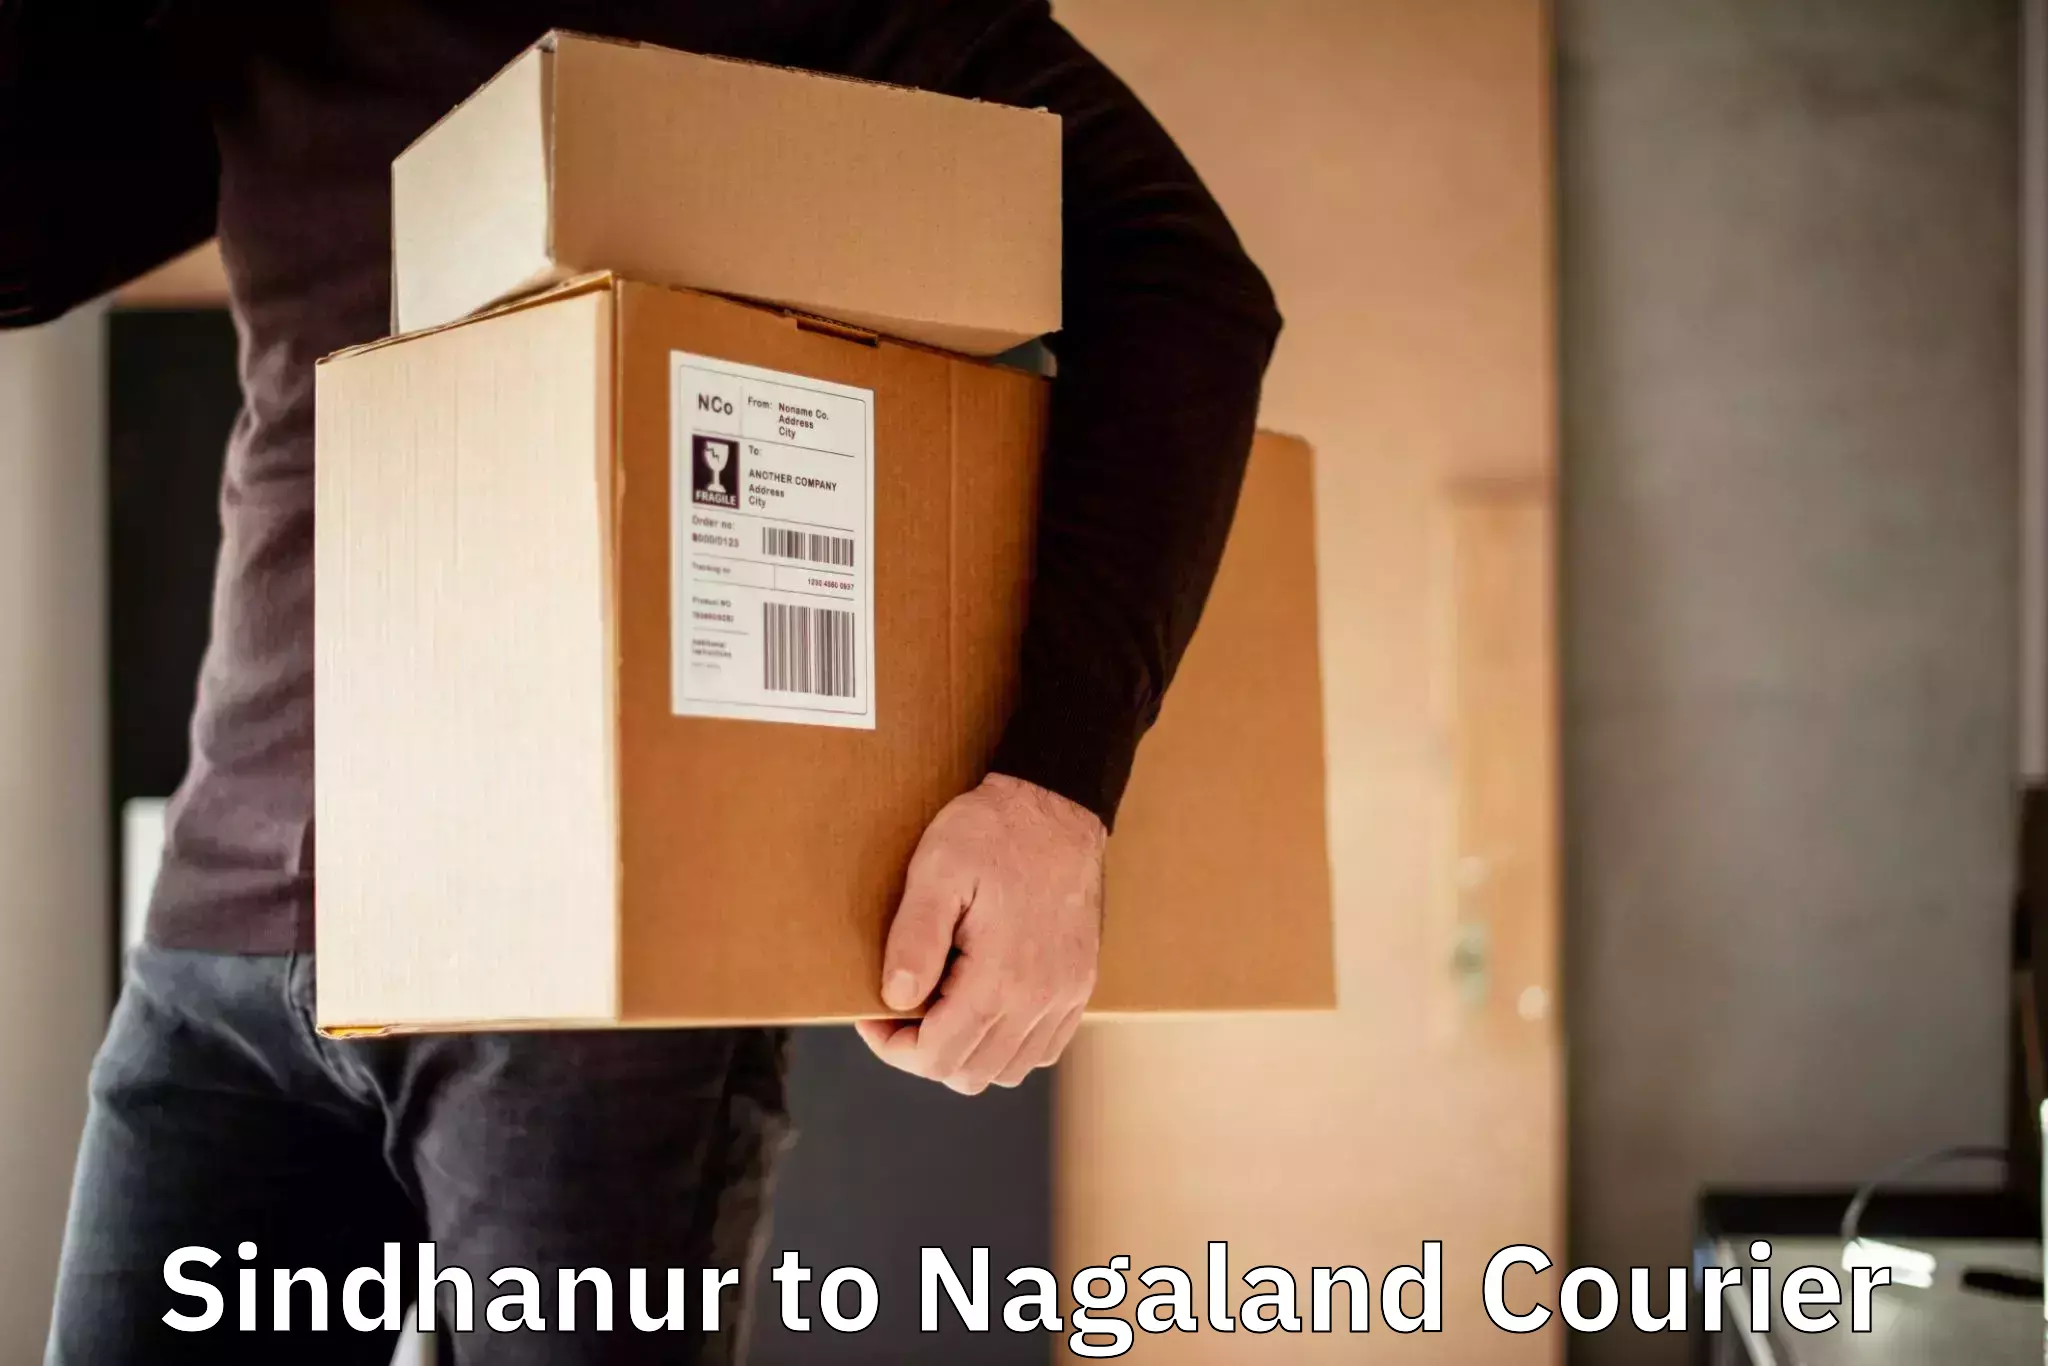 Smart shipping technology Sindhanur to Nagaland